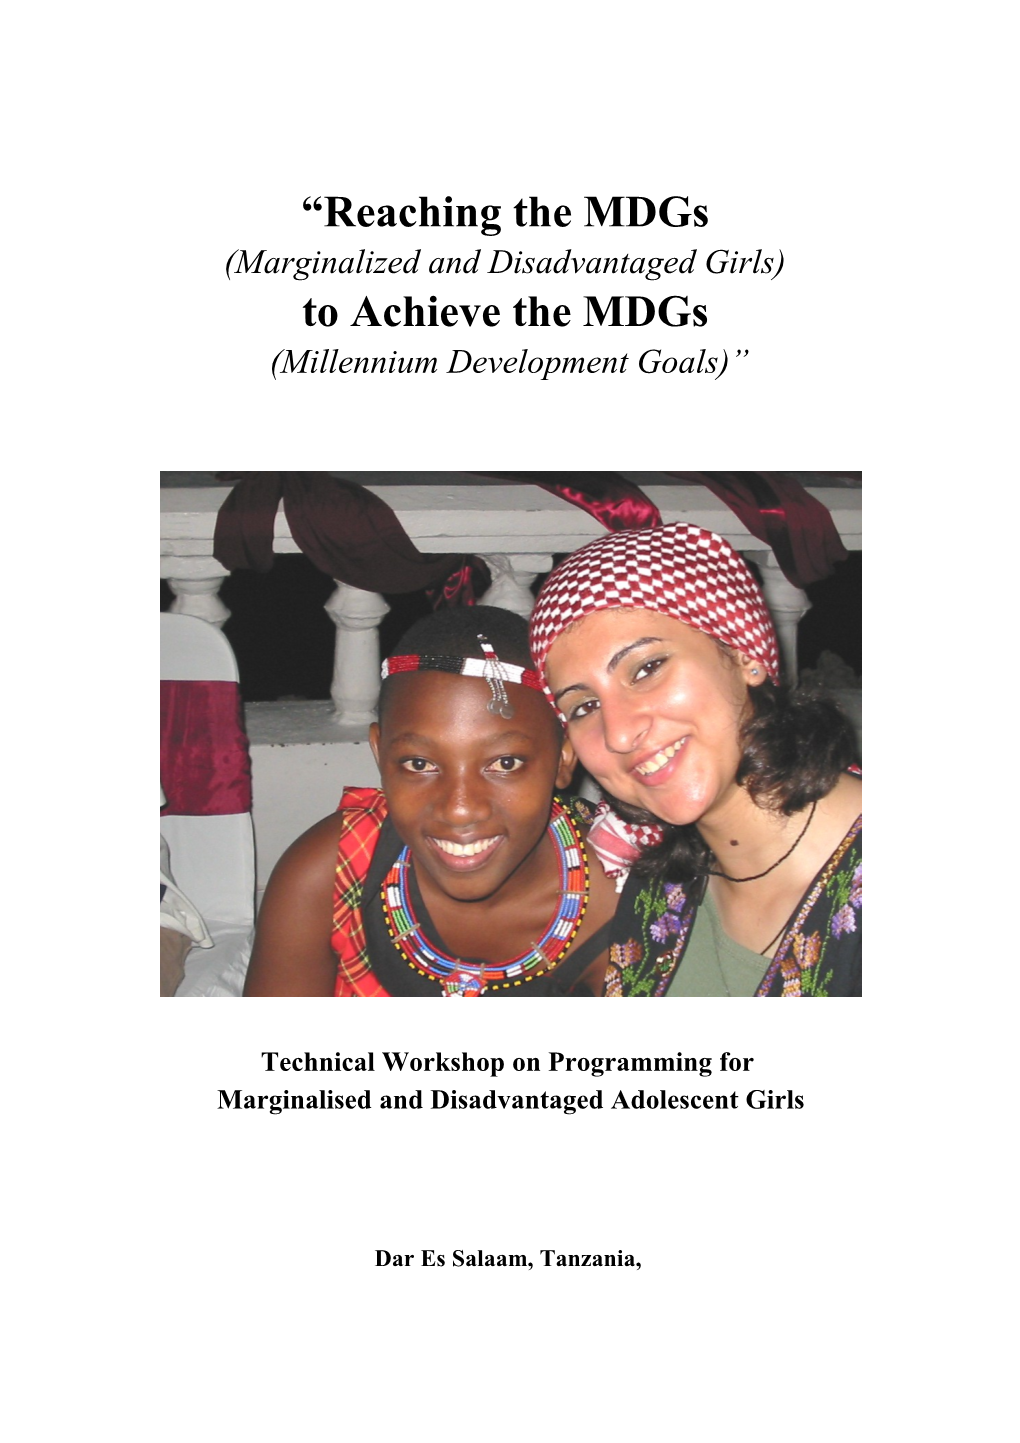 Reaching Marginalized and Disadvantaged Girls (Mdgs) to Reach the Millennium Development